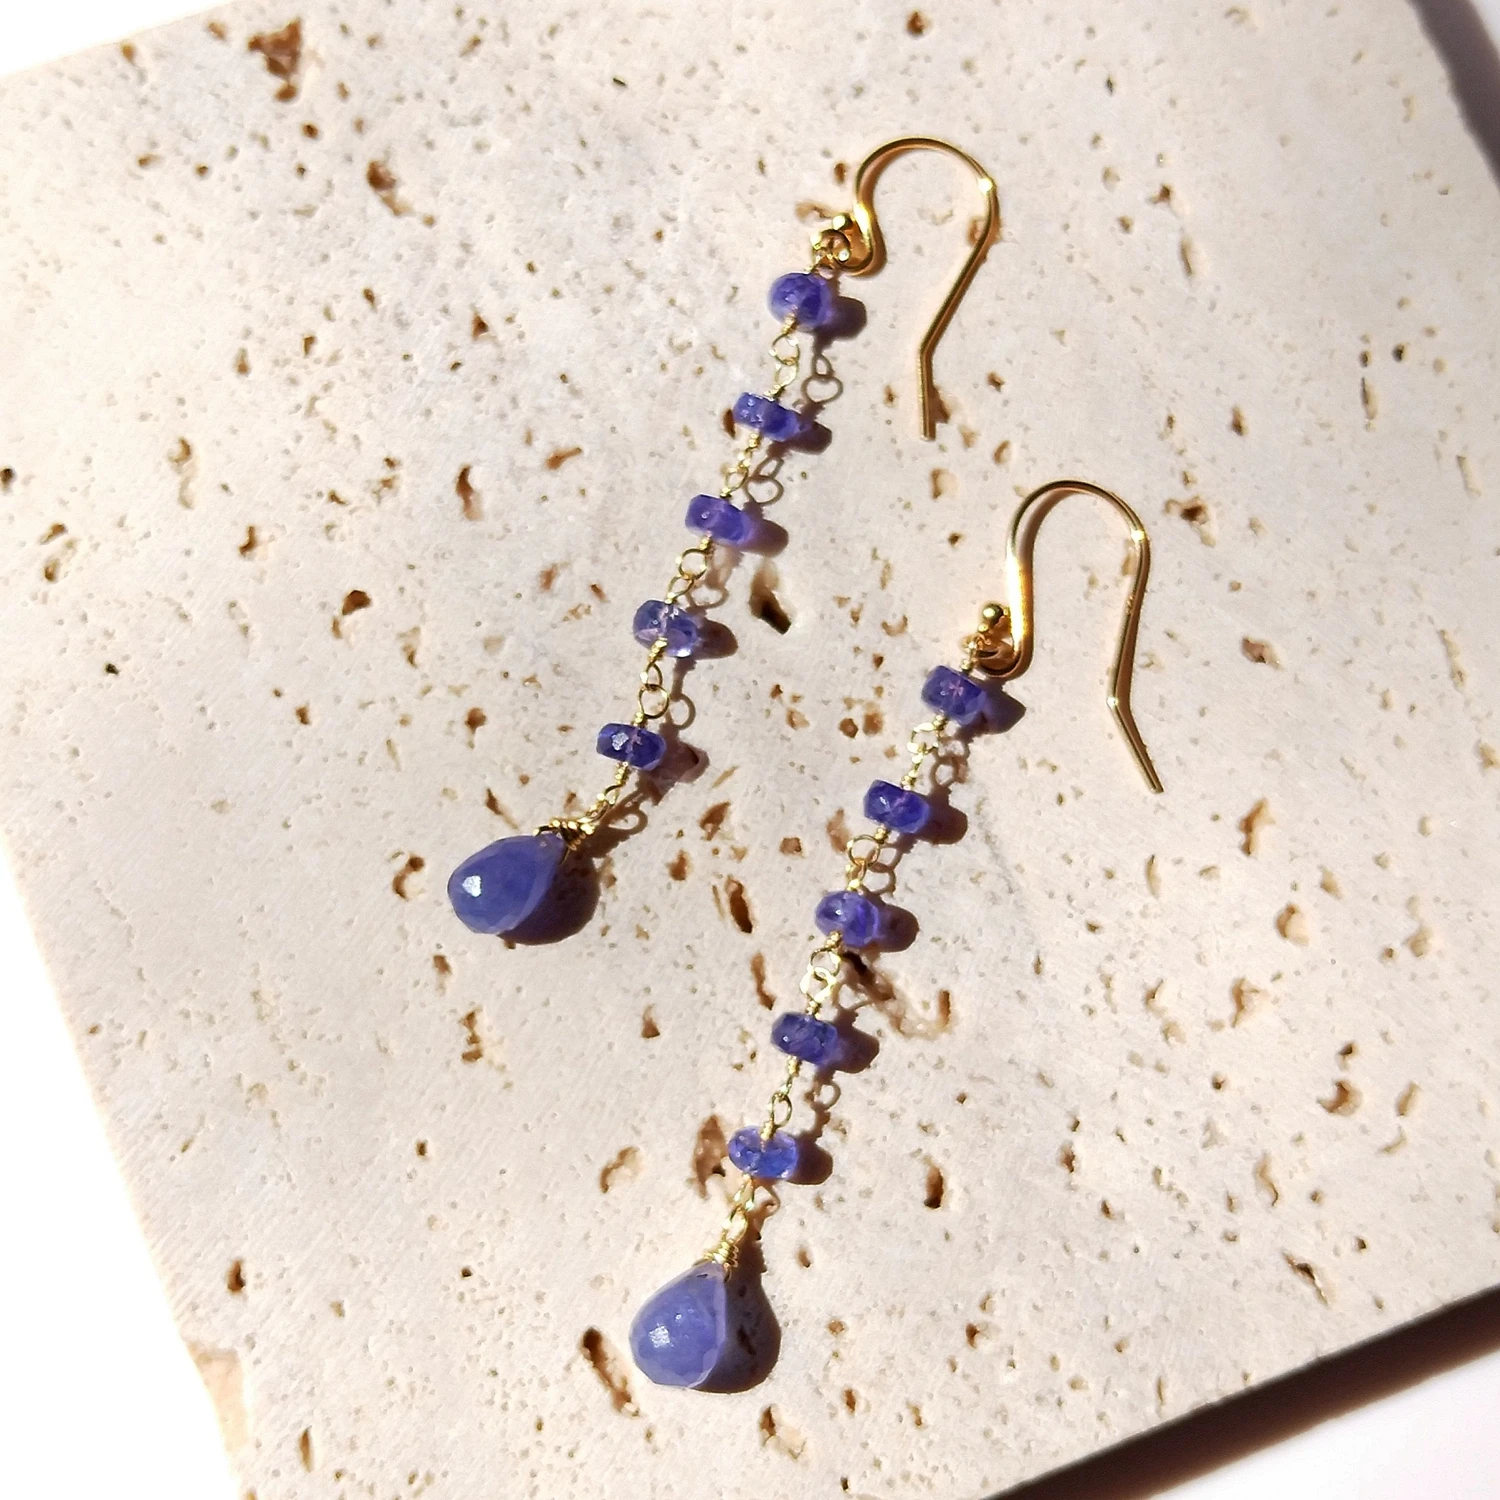 Tanzanite 14k gold filled dangle earrings natural stone handmade jewelry for women gift thumb200